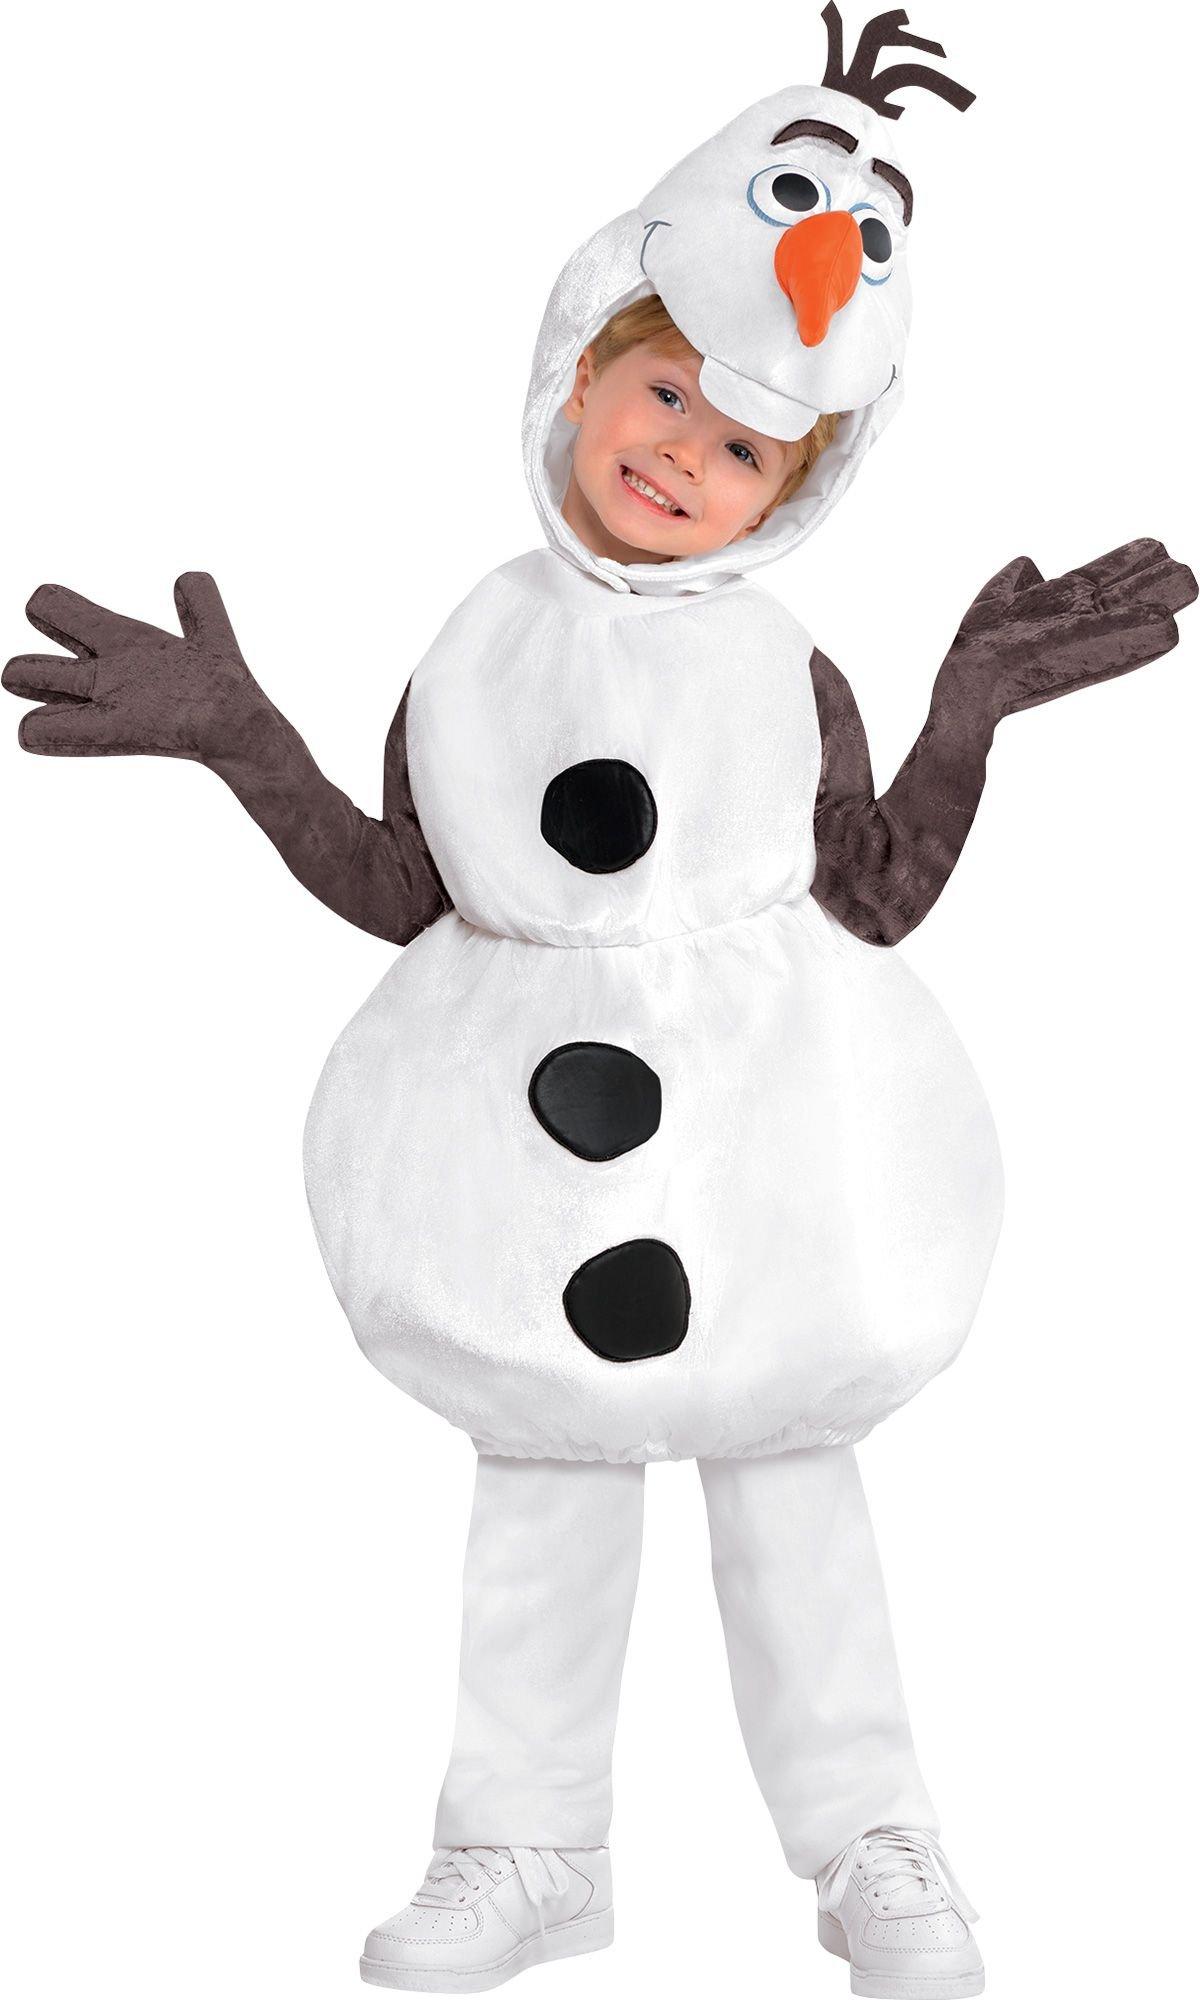 Kids' Olaf Costume - Frozen | Party City